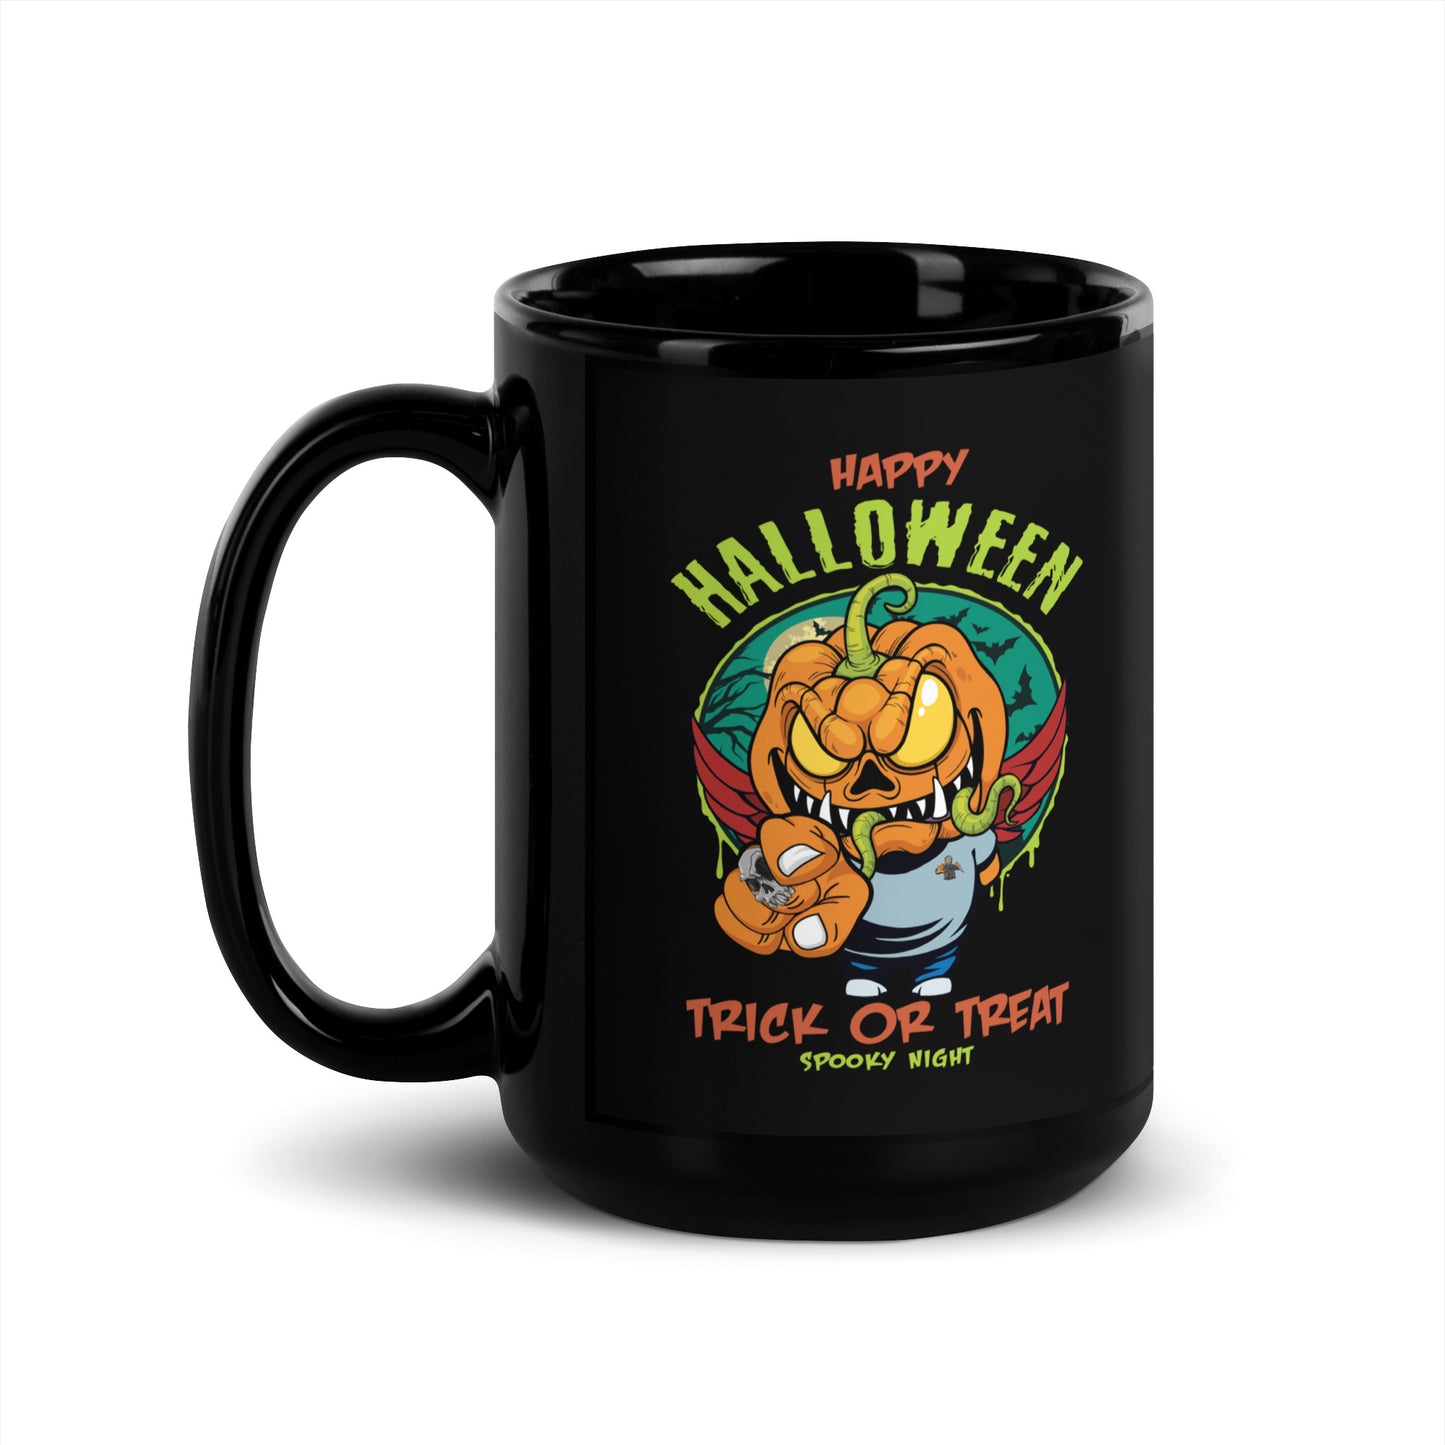 Spooky Night Coffee Mug